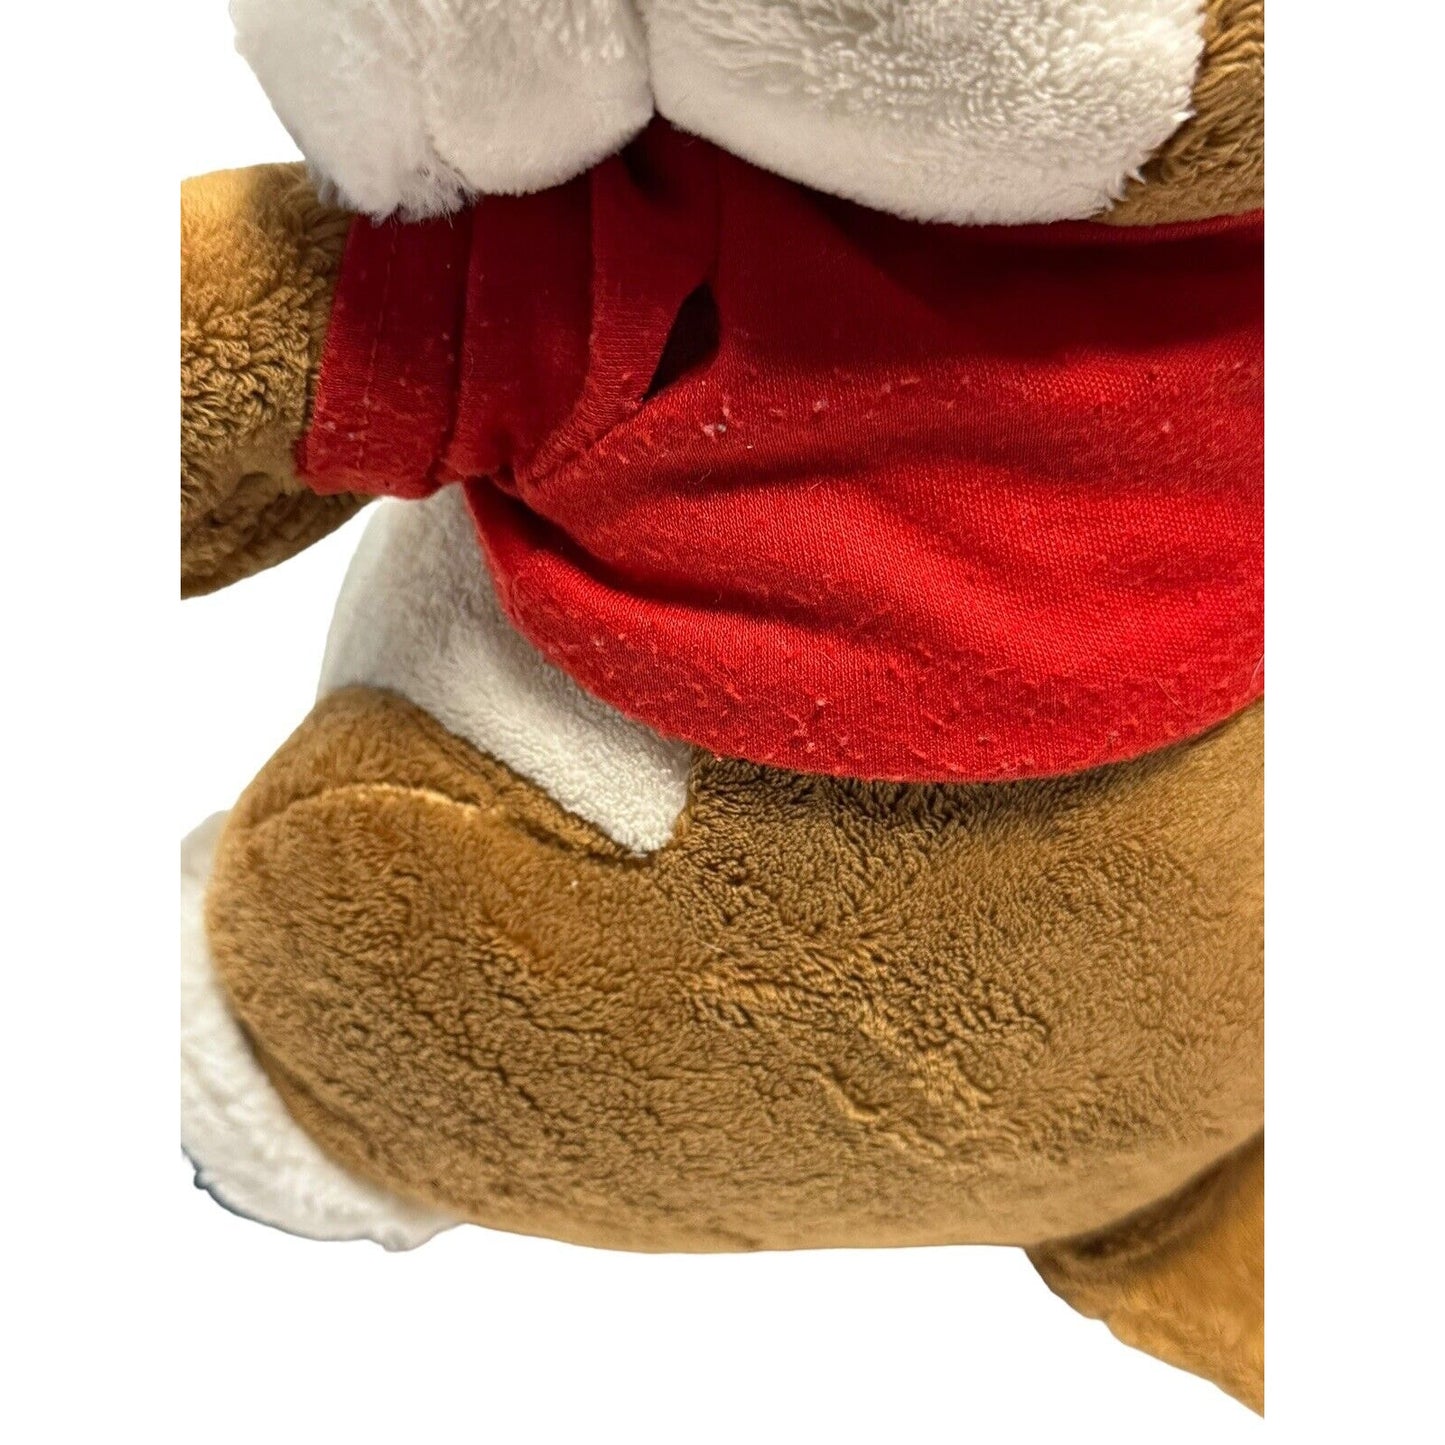 2021 Jagg Buc-cee Beaver Santa Claus Christmas Stuffed Plush 10” Buccees